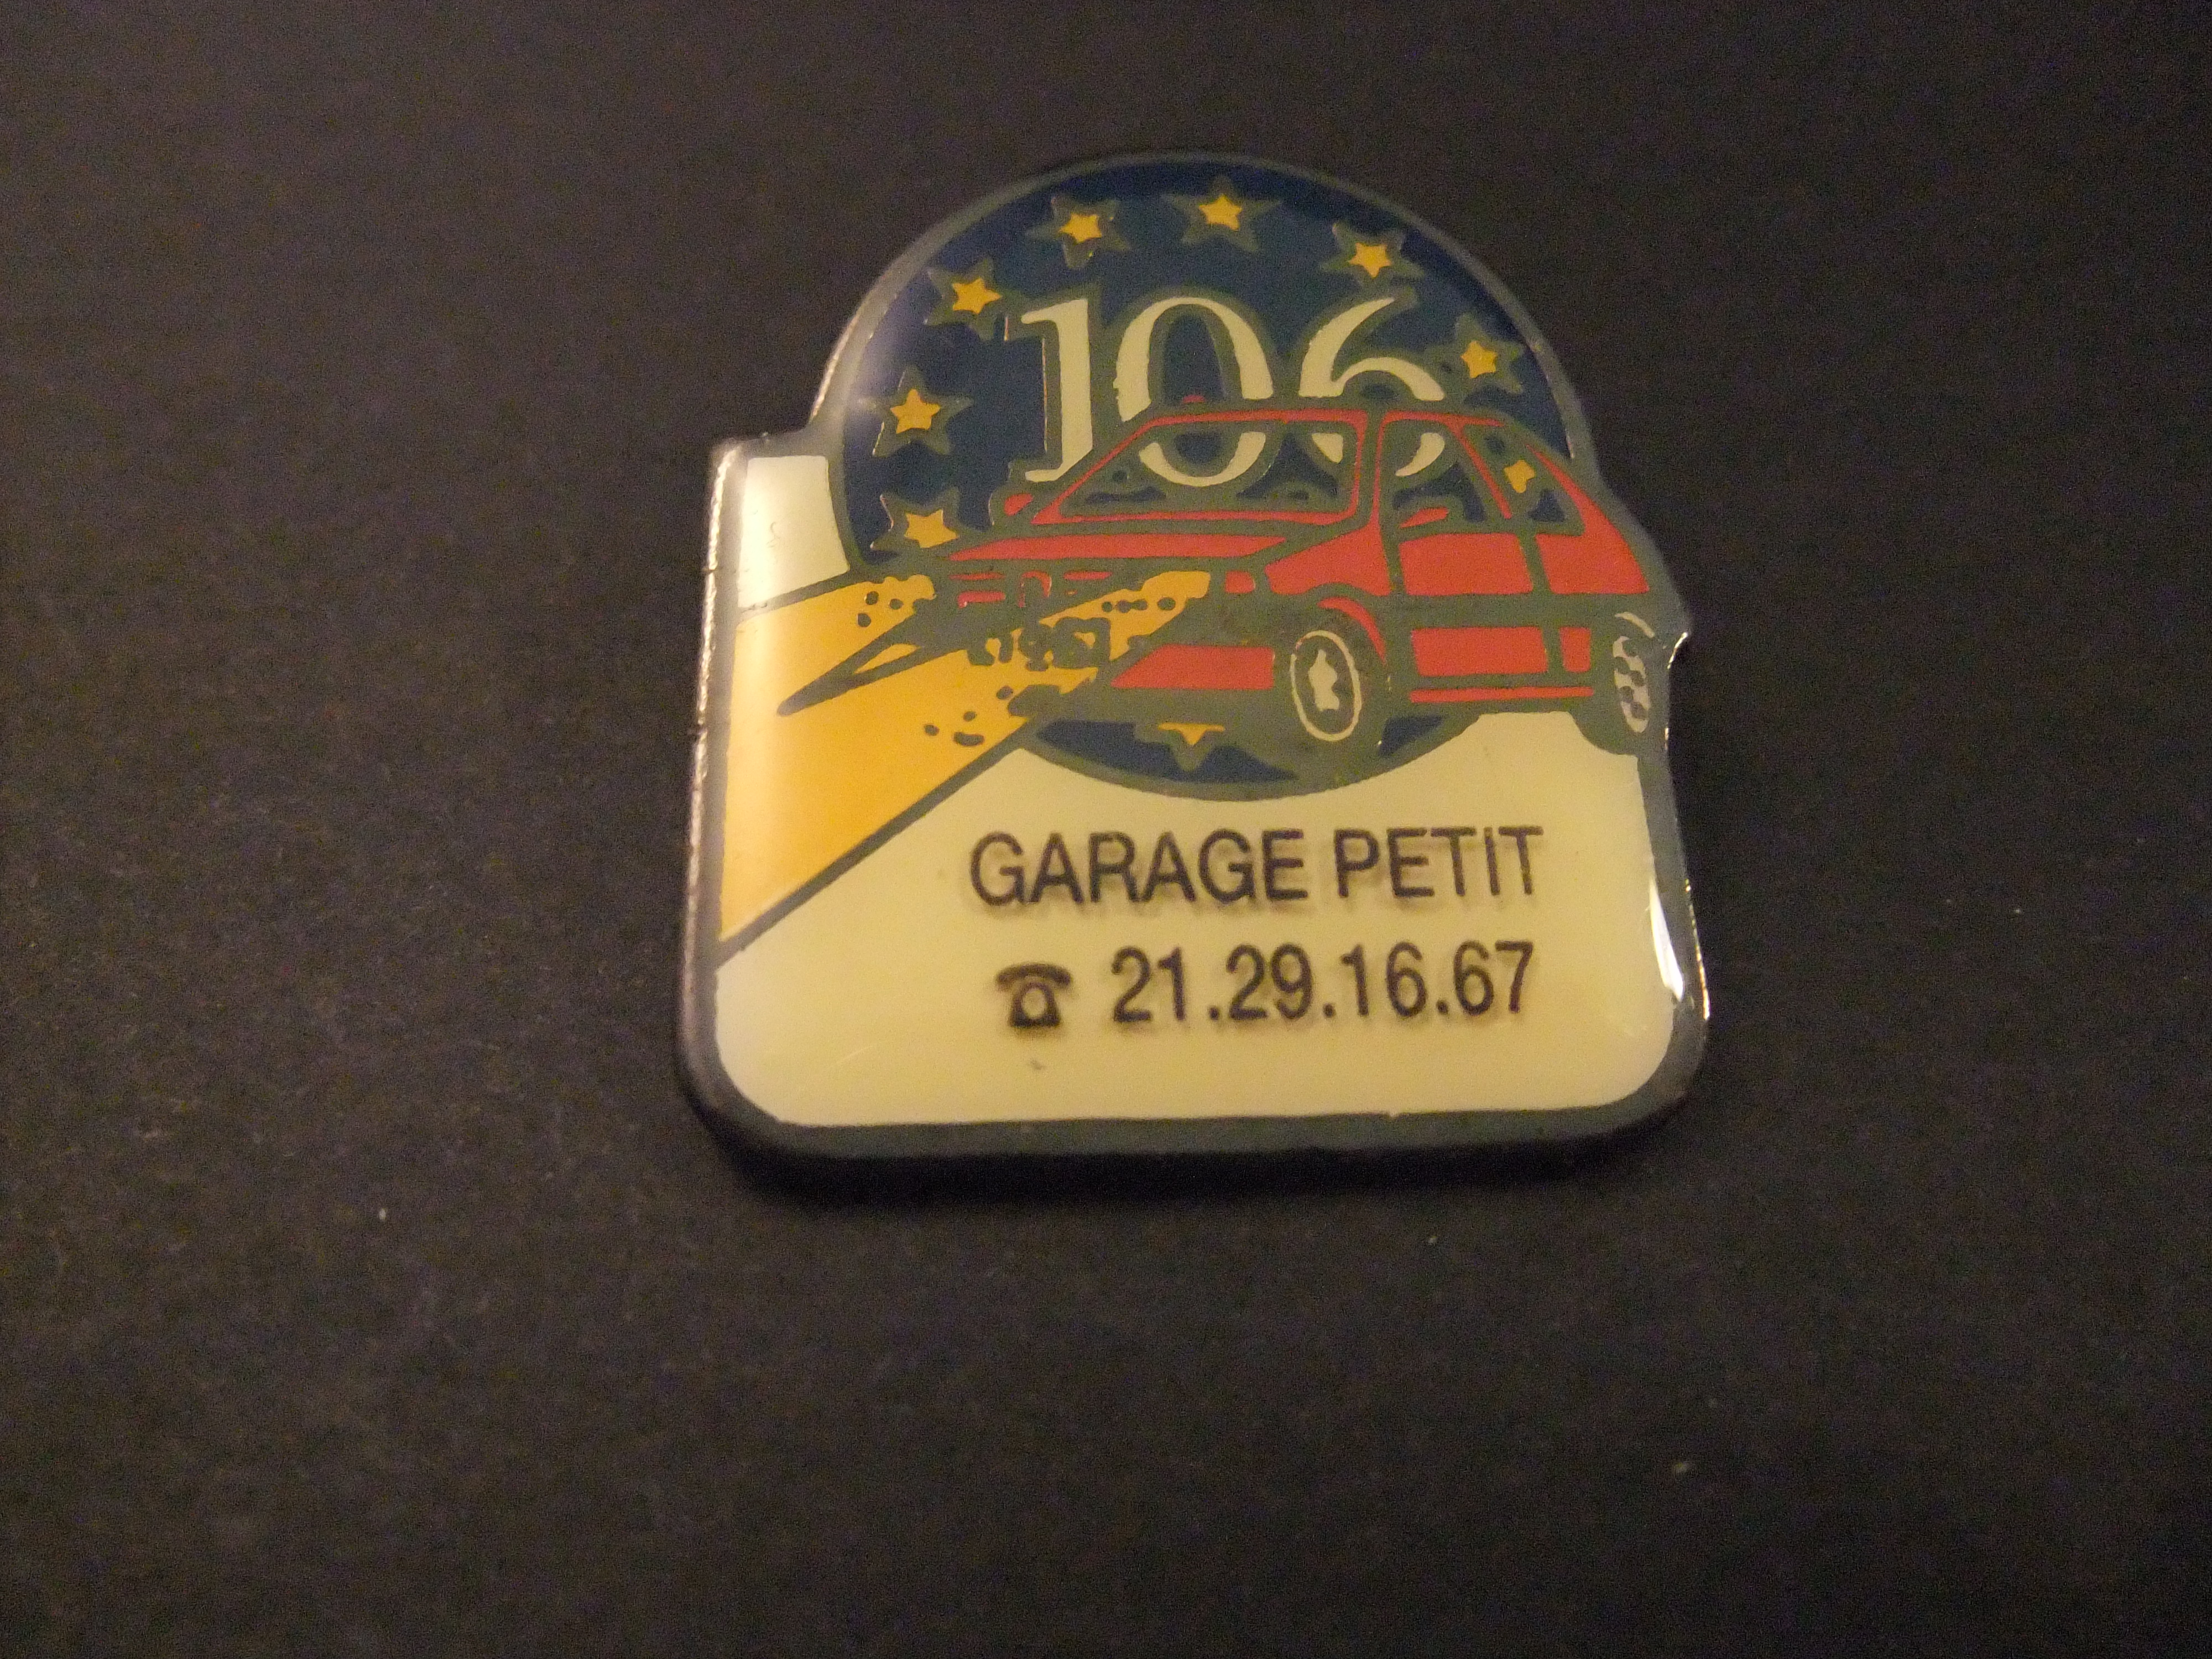 Peugeot 106 ( garage Petit Frankrijk)